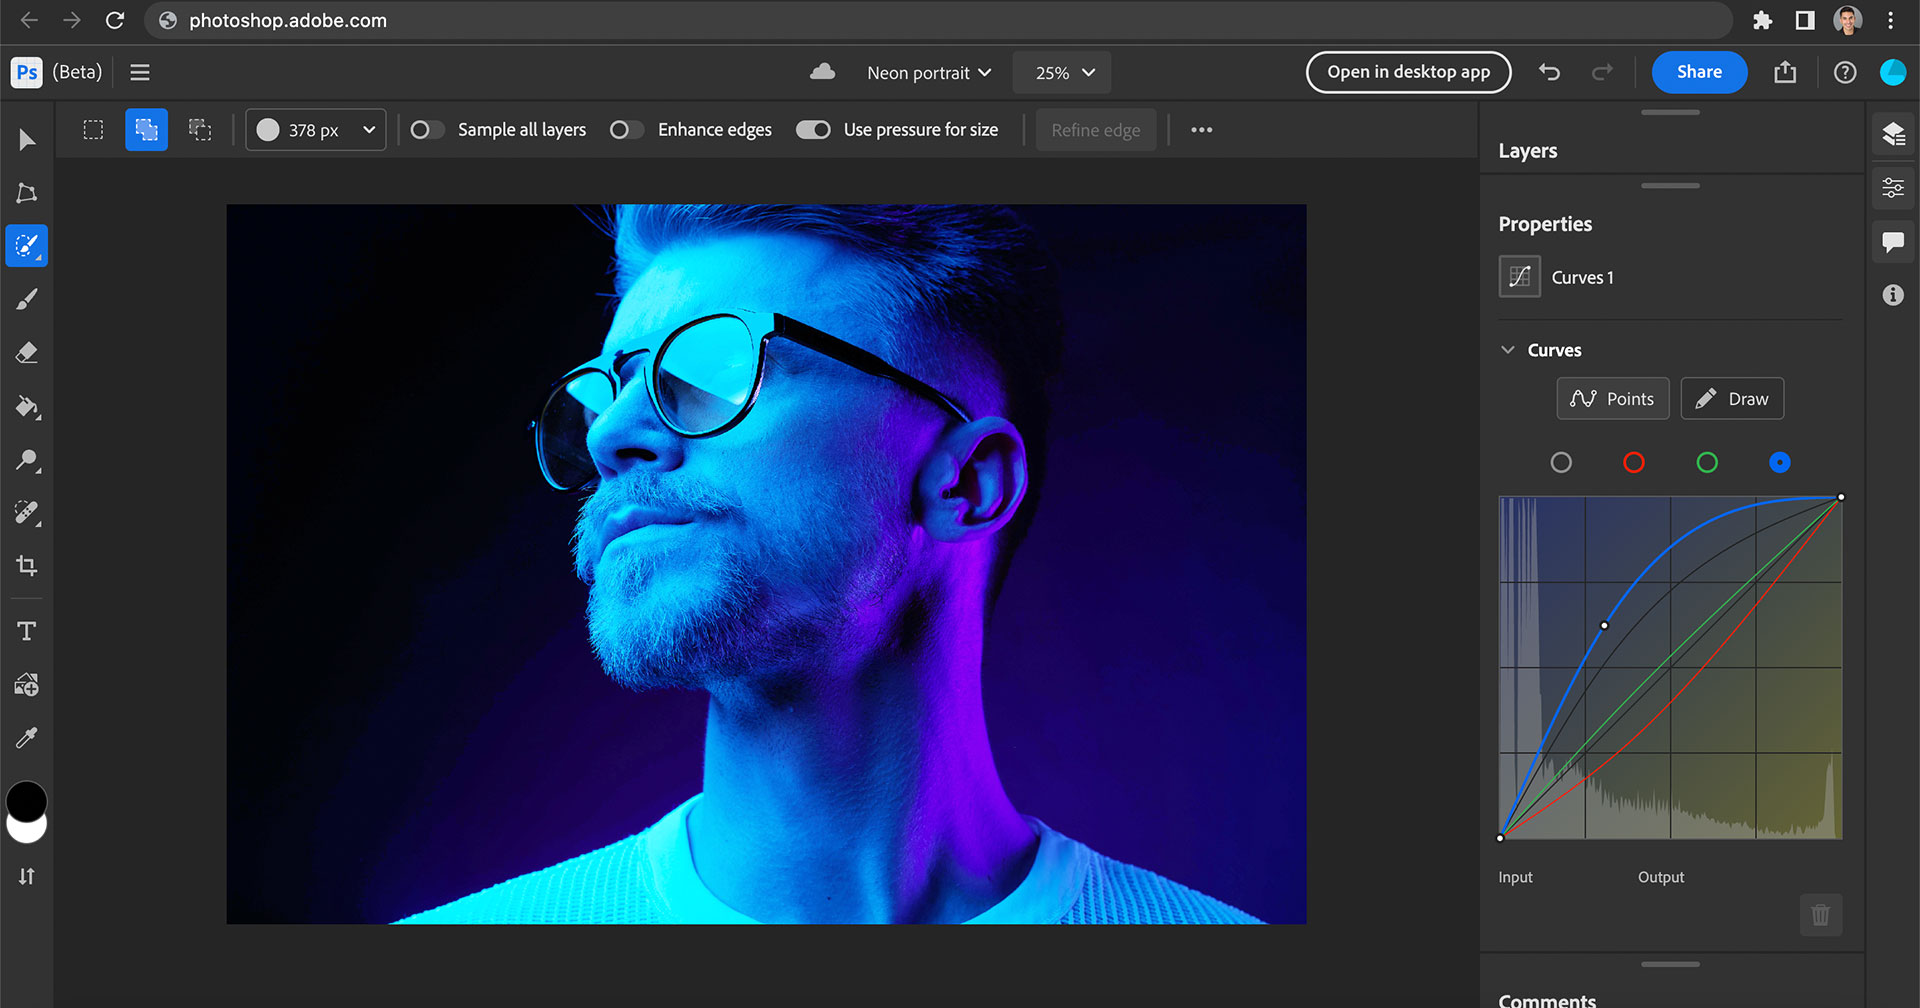 Adobe เติมพลังให้ Photoshop และ Lightroom ด้วยอัปเดตใหญ่ ฟีเจอร์ใหม่เพียบ!